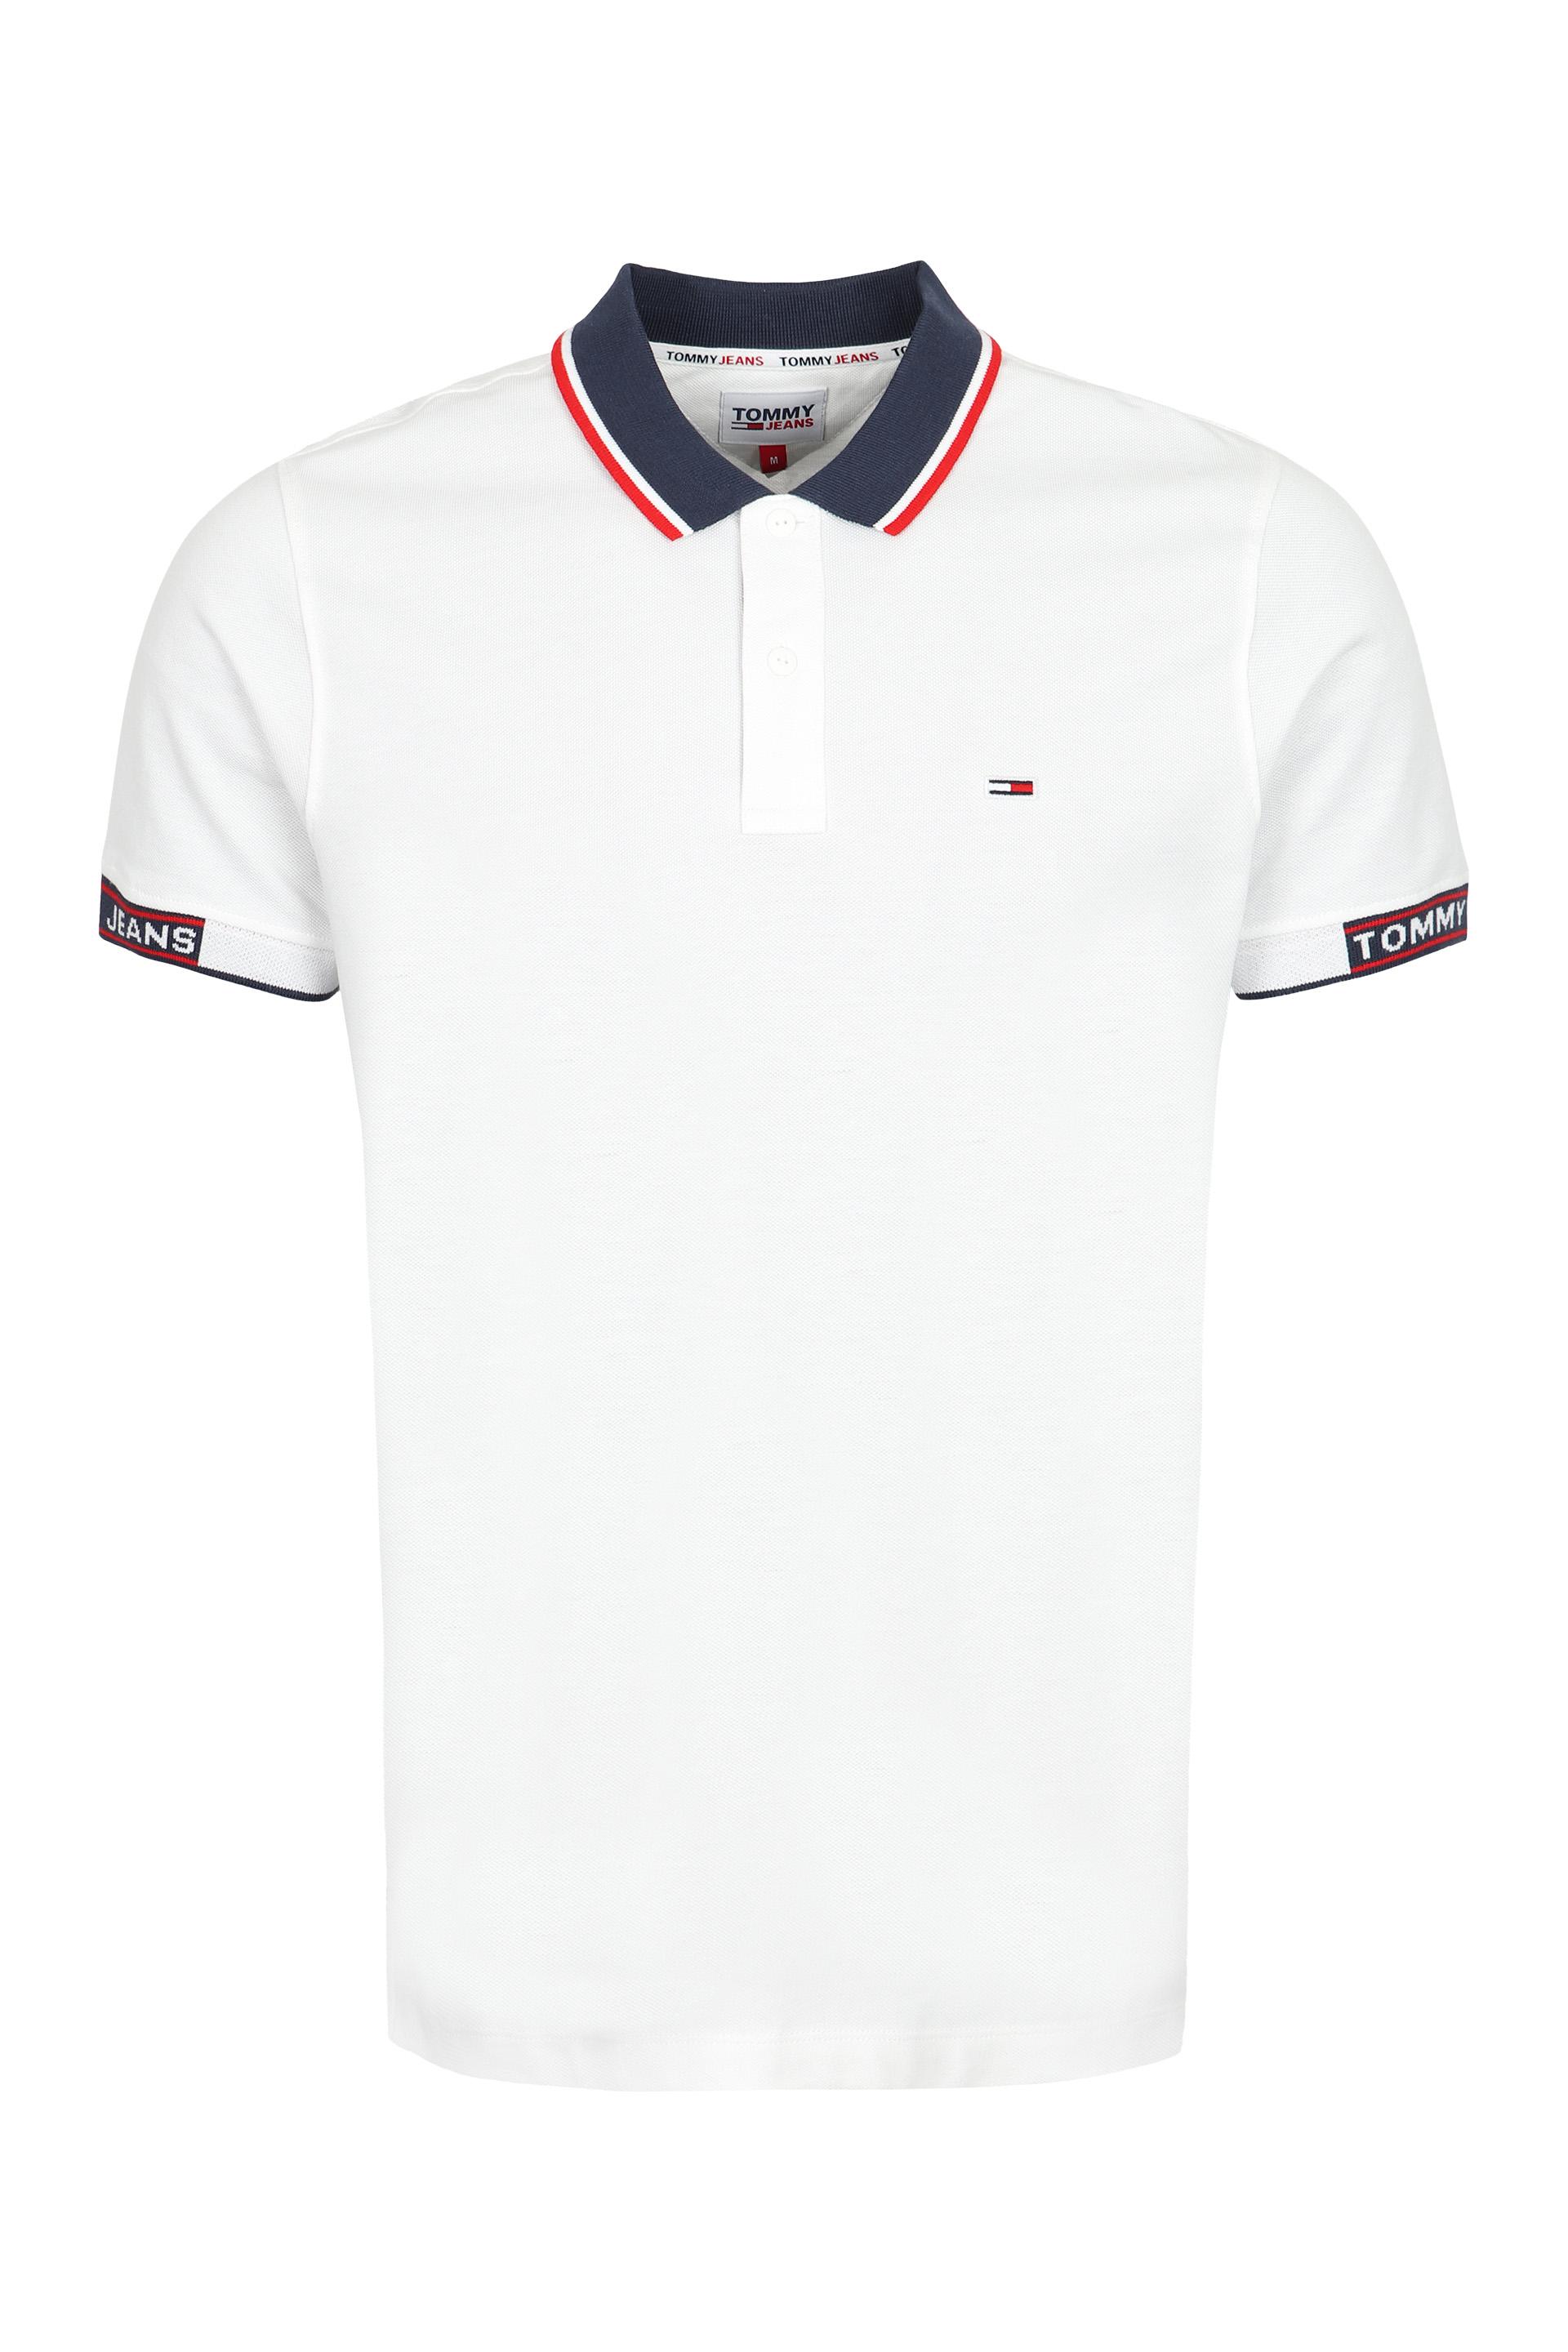 White BNWT Details about   Tommy Hilfiger Cotton Pique Polo Shirt 